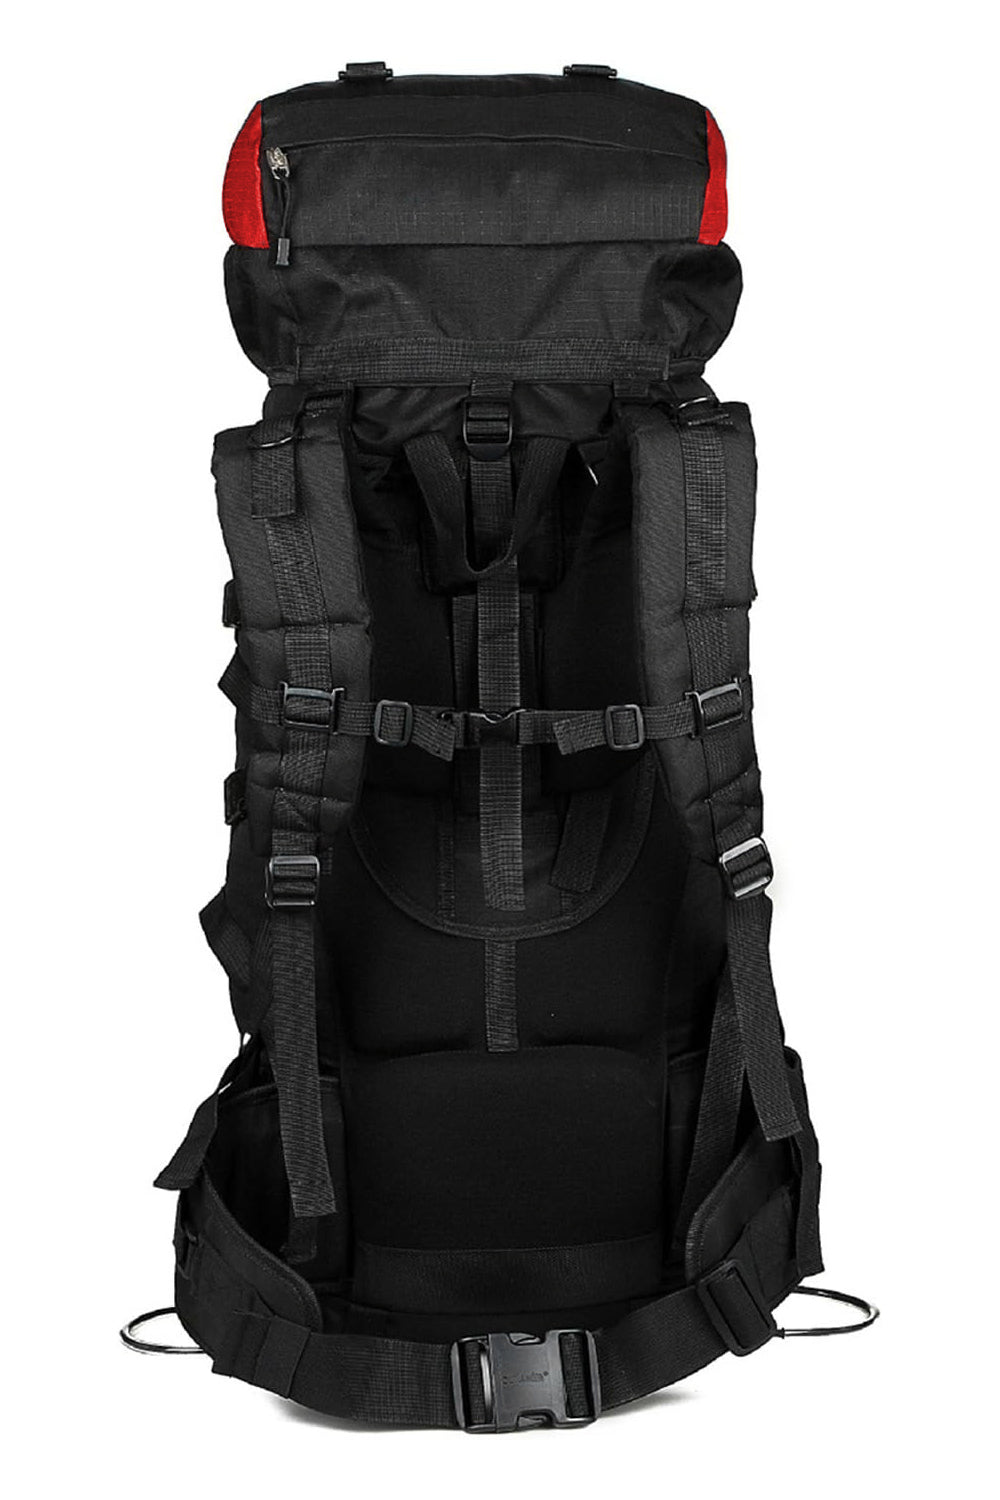 Manasalu Extreme 70L+10L 2 In 1 Waterproof Camping Backpack Set FX-8854-2